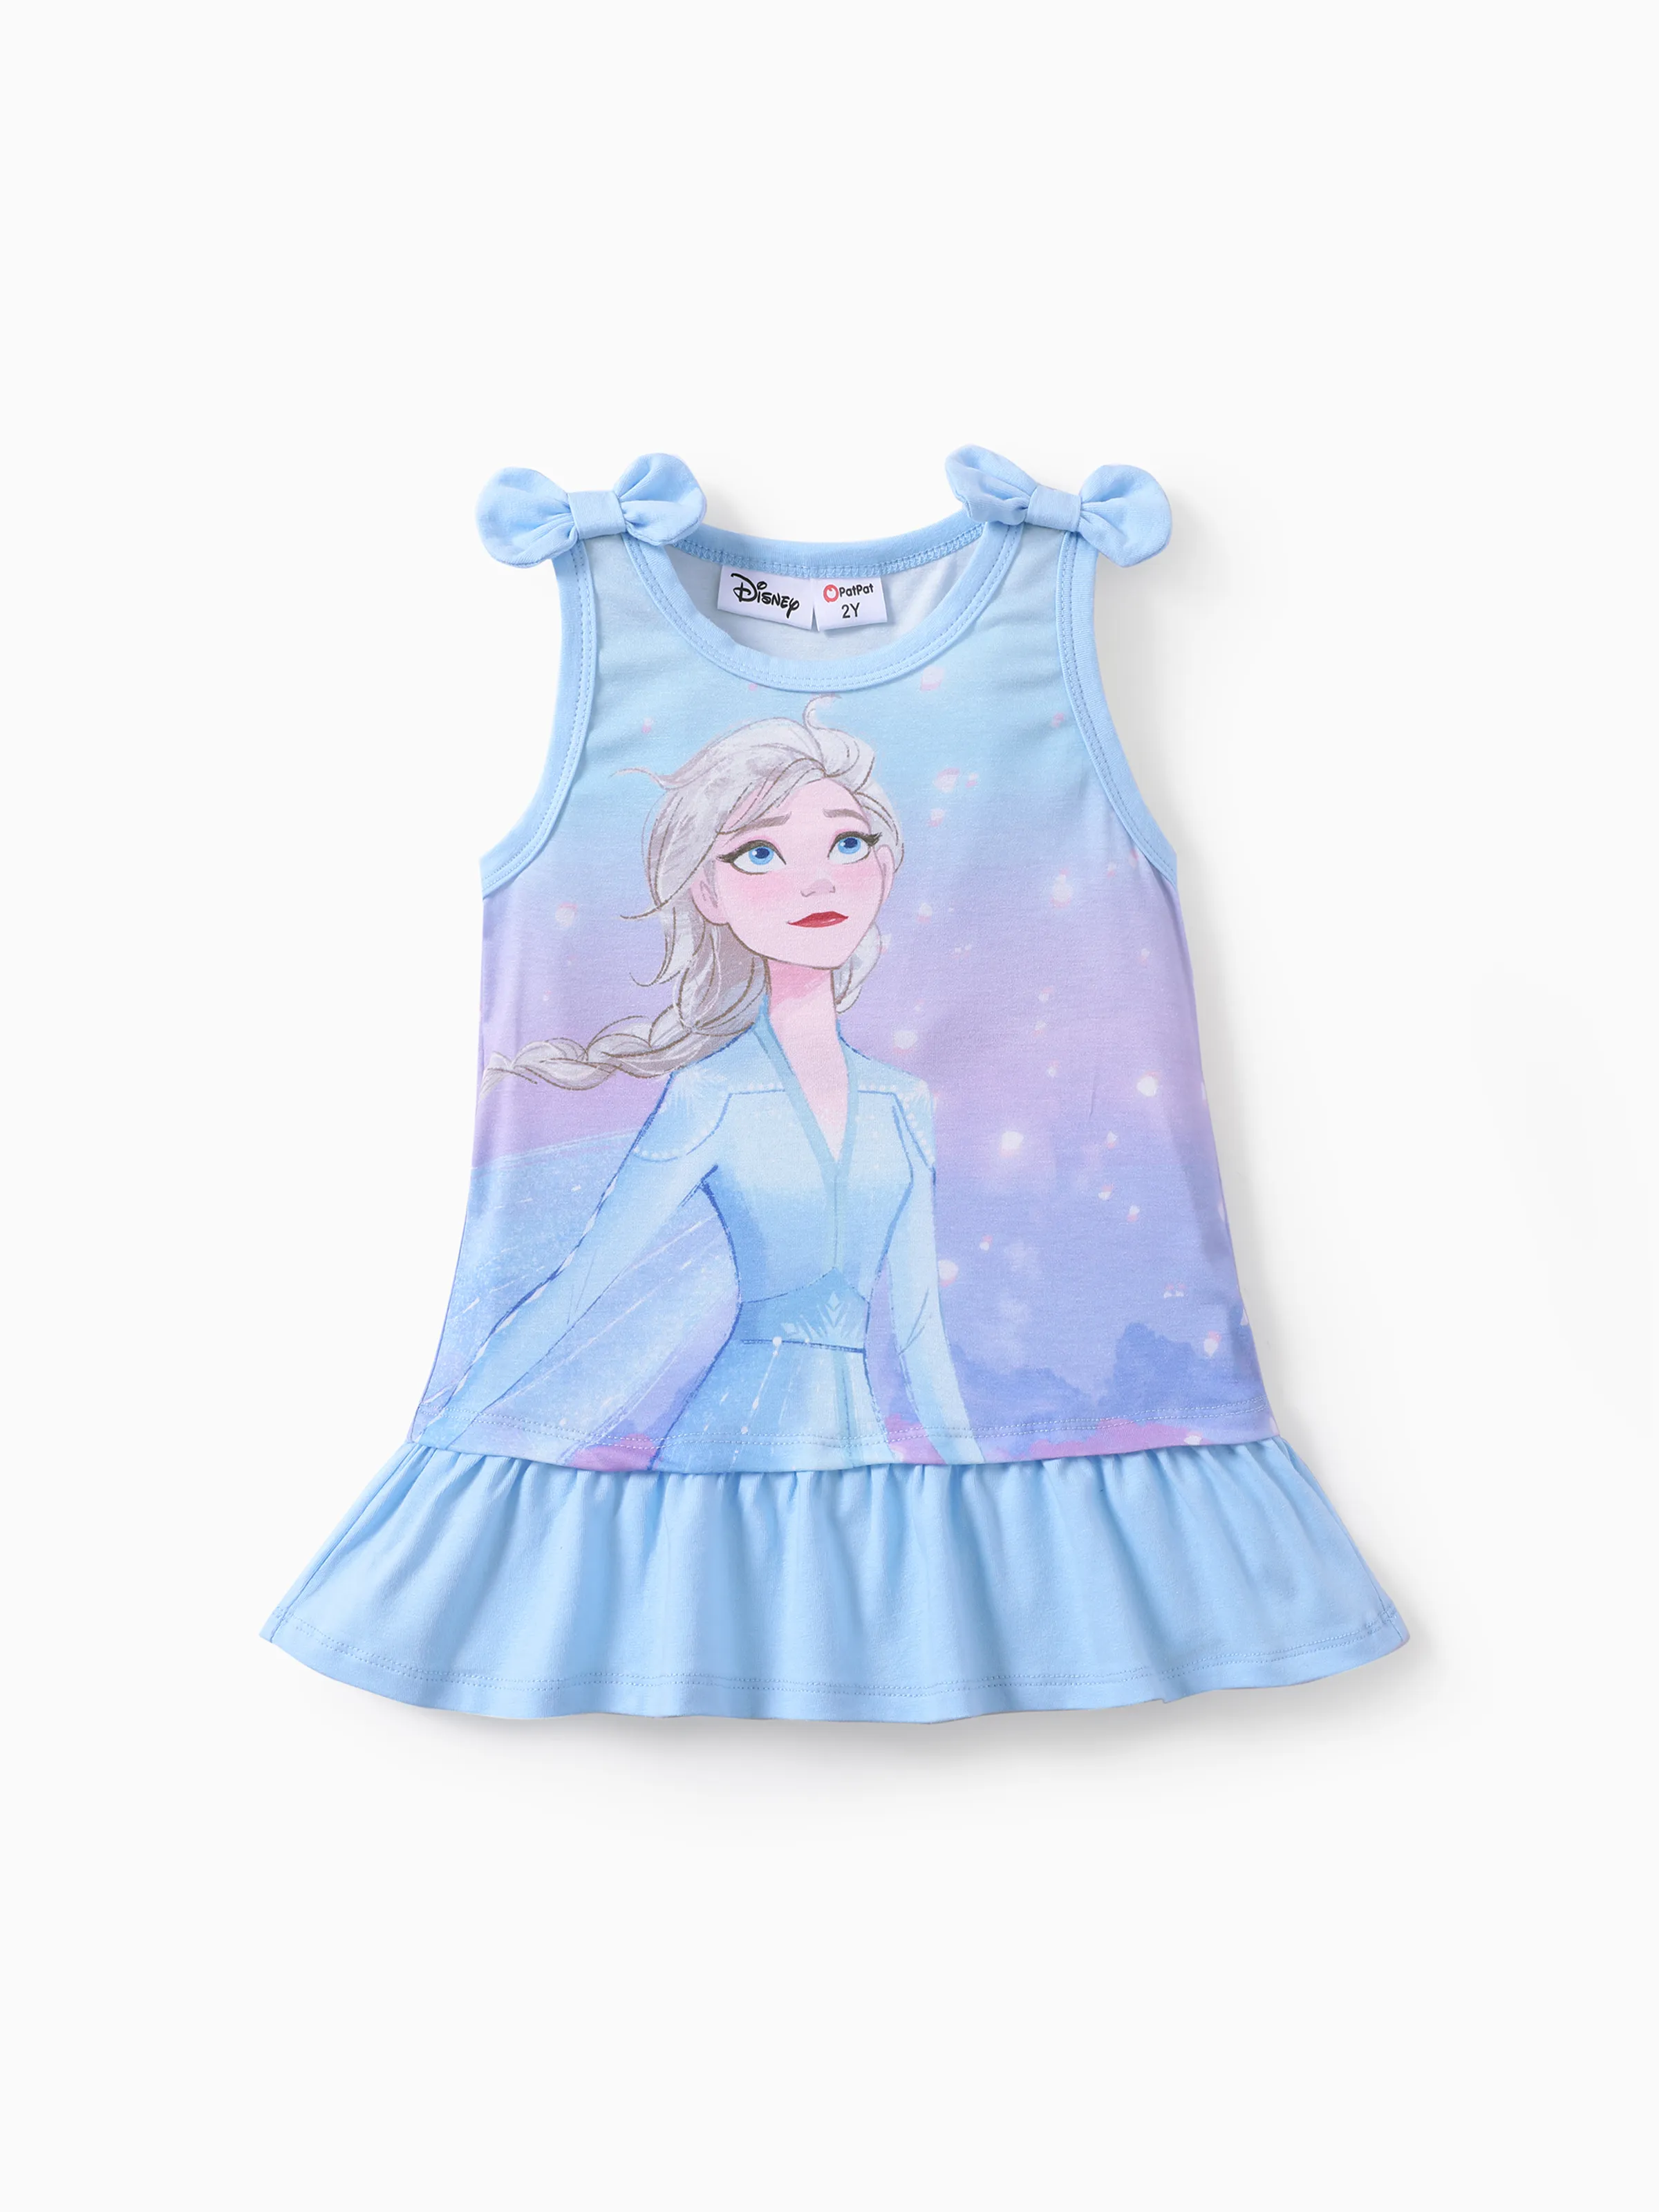 

Disney Frozen Toddler Girls Elsa 1pc Toddler Girl Gradient Character Print Bowknot Tank Top